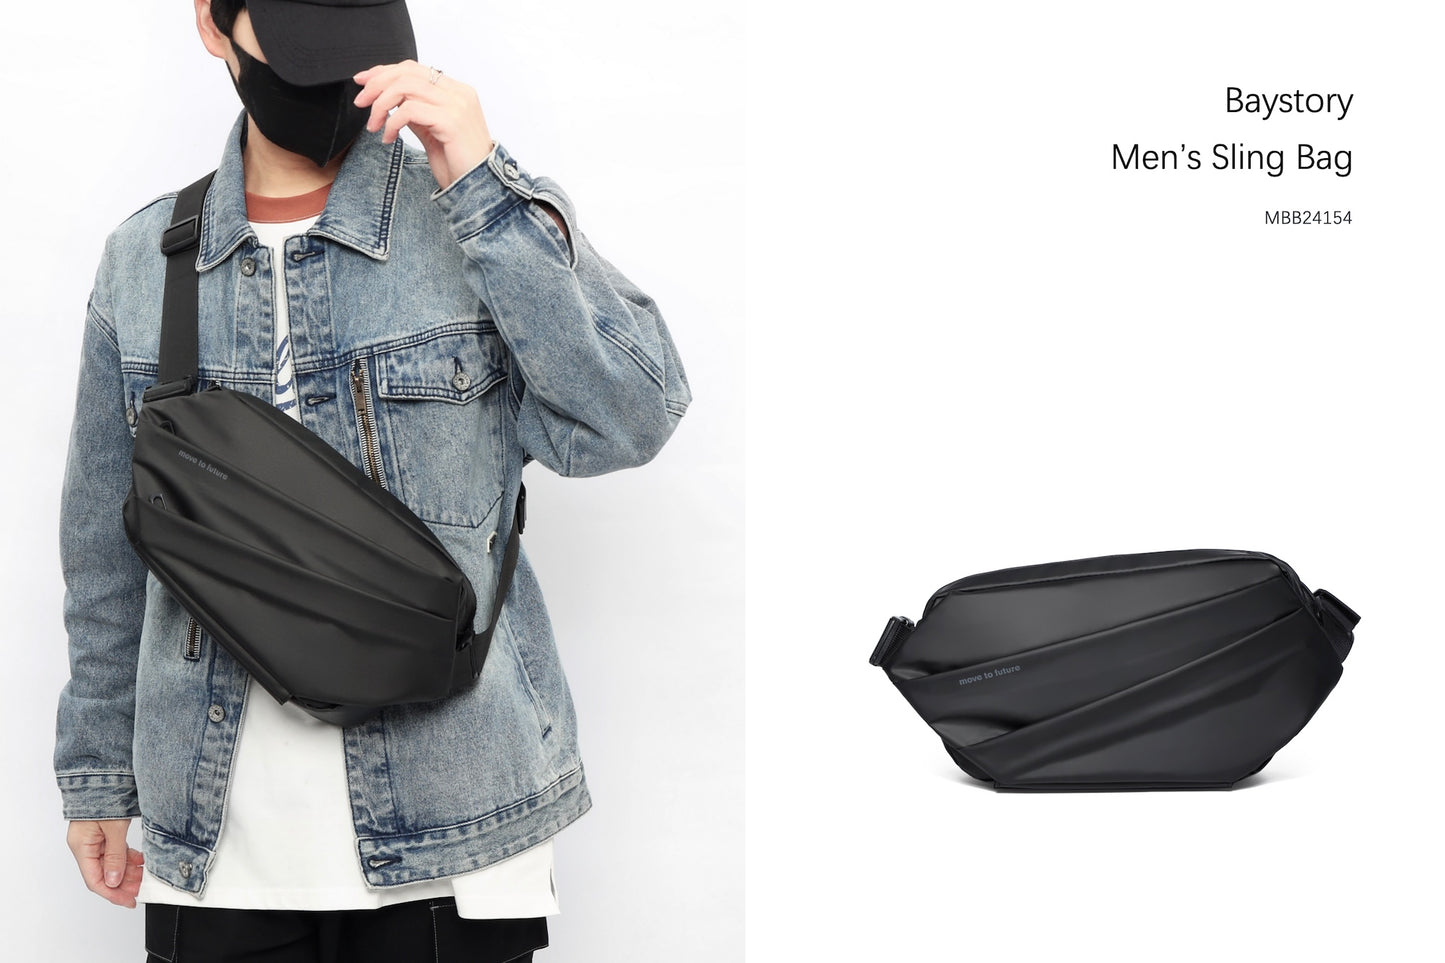 Men's Sling Bag MBB24154 - Baystory